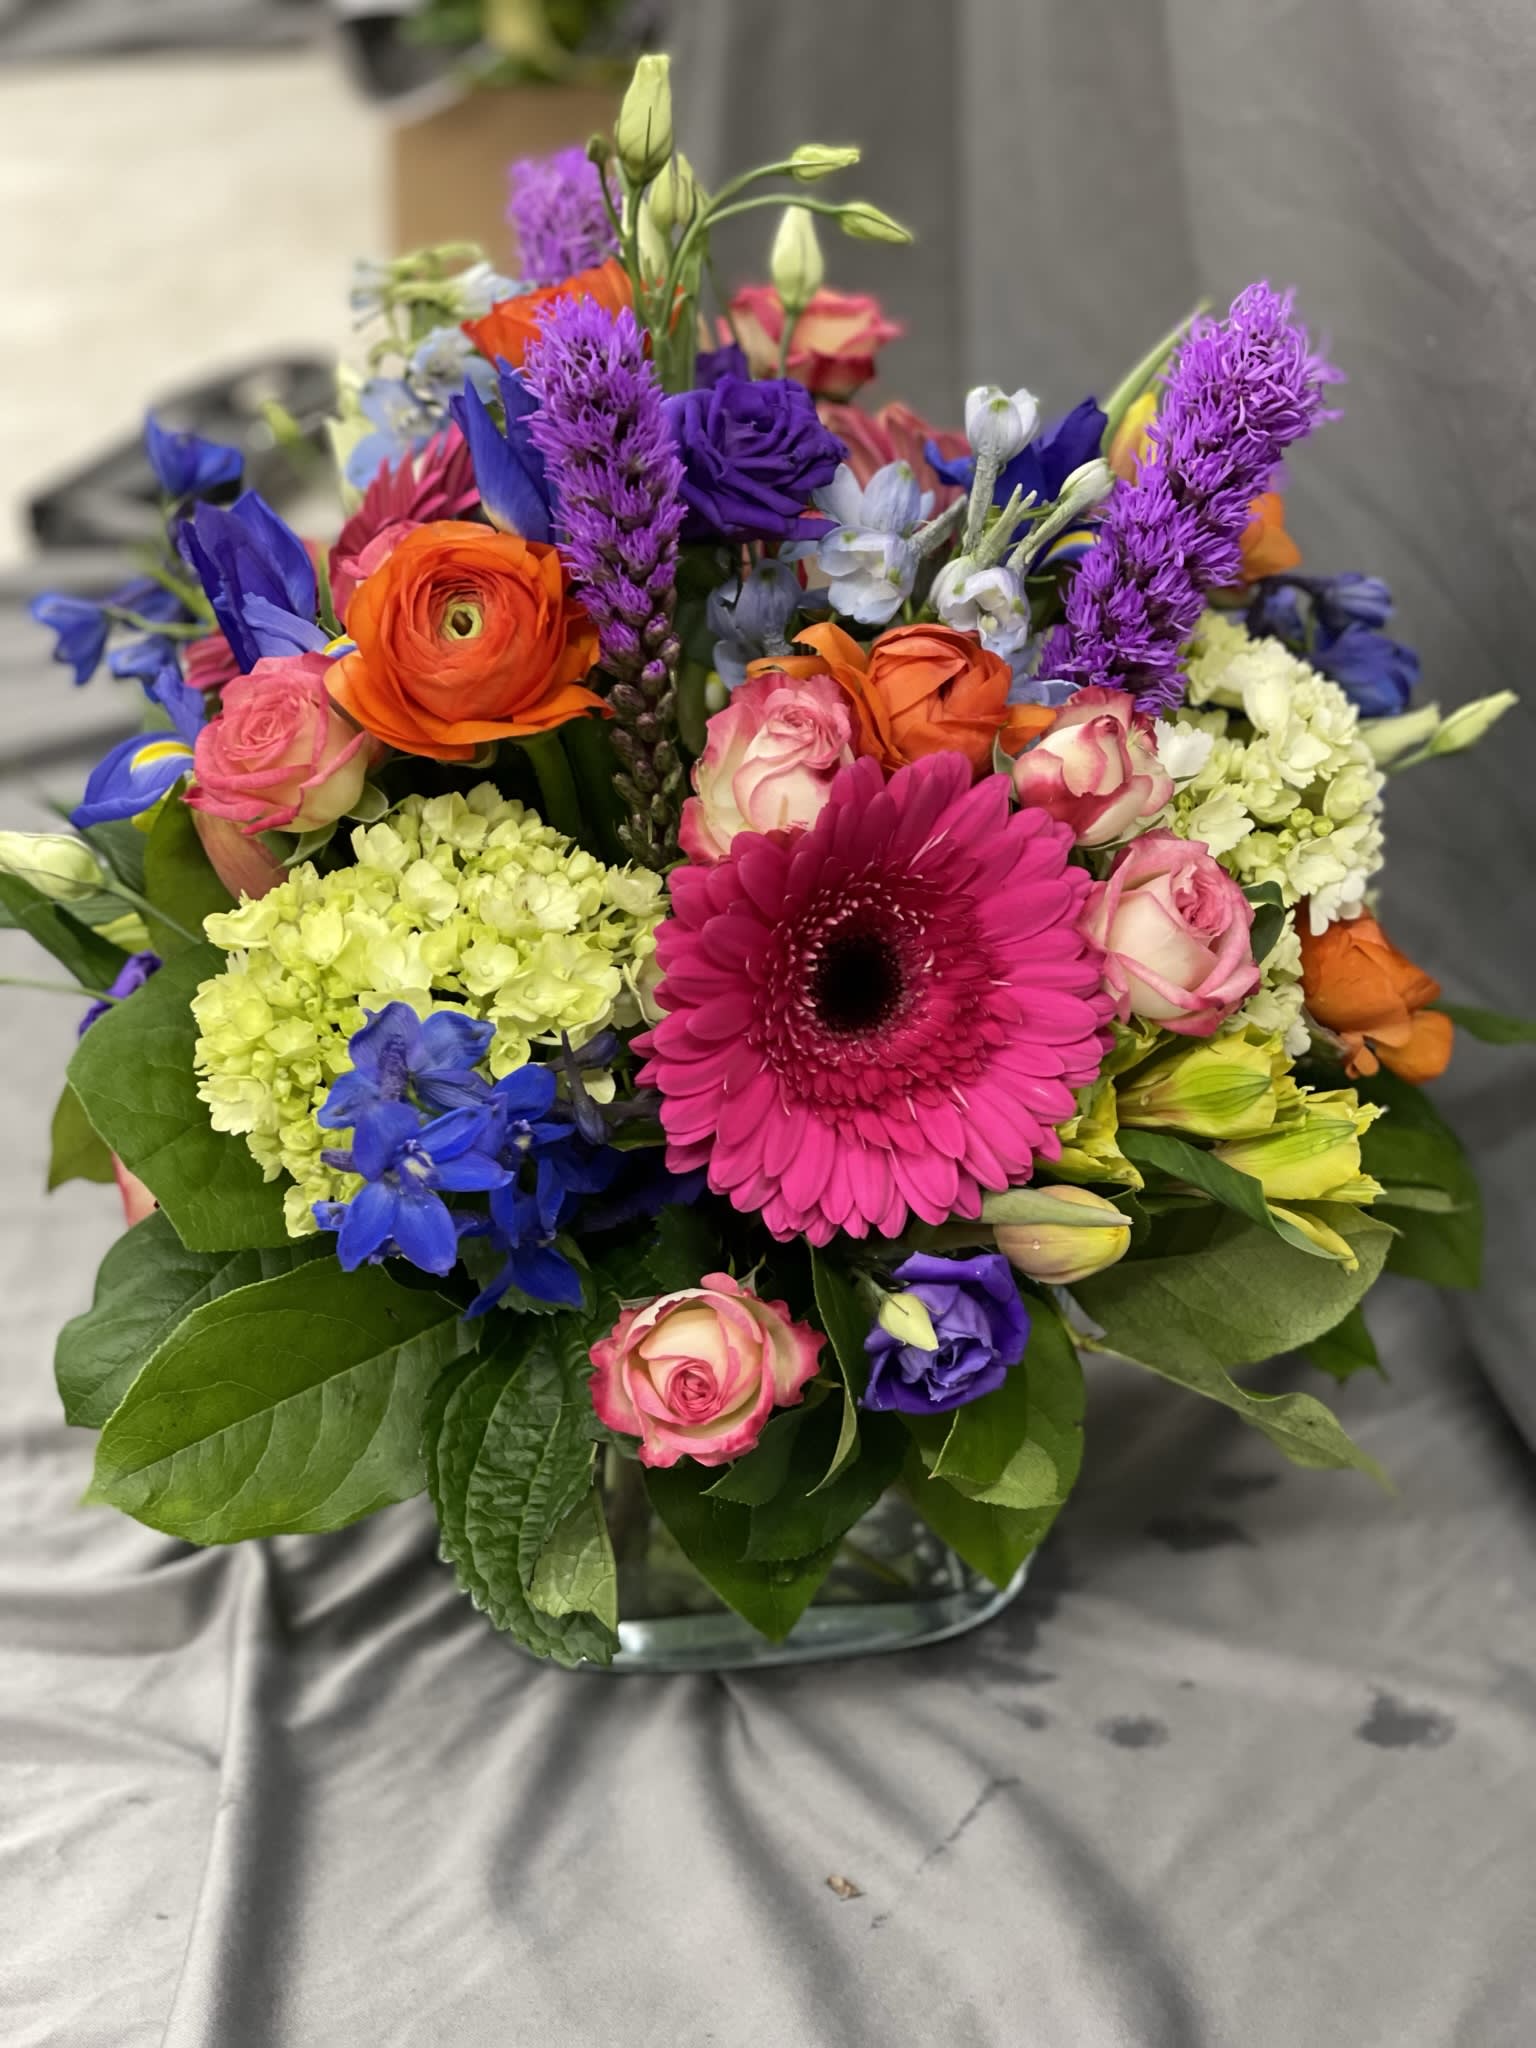 Colorful Celebrations - A mix of vibrant jewel toned seasonal blooms arranged into a sleek, stylish glass cube vase.